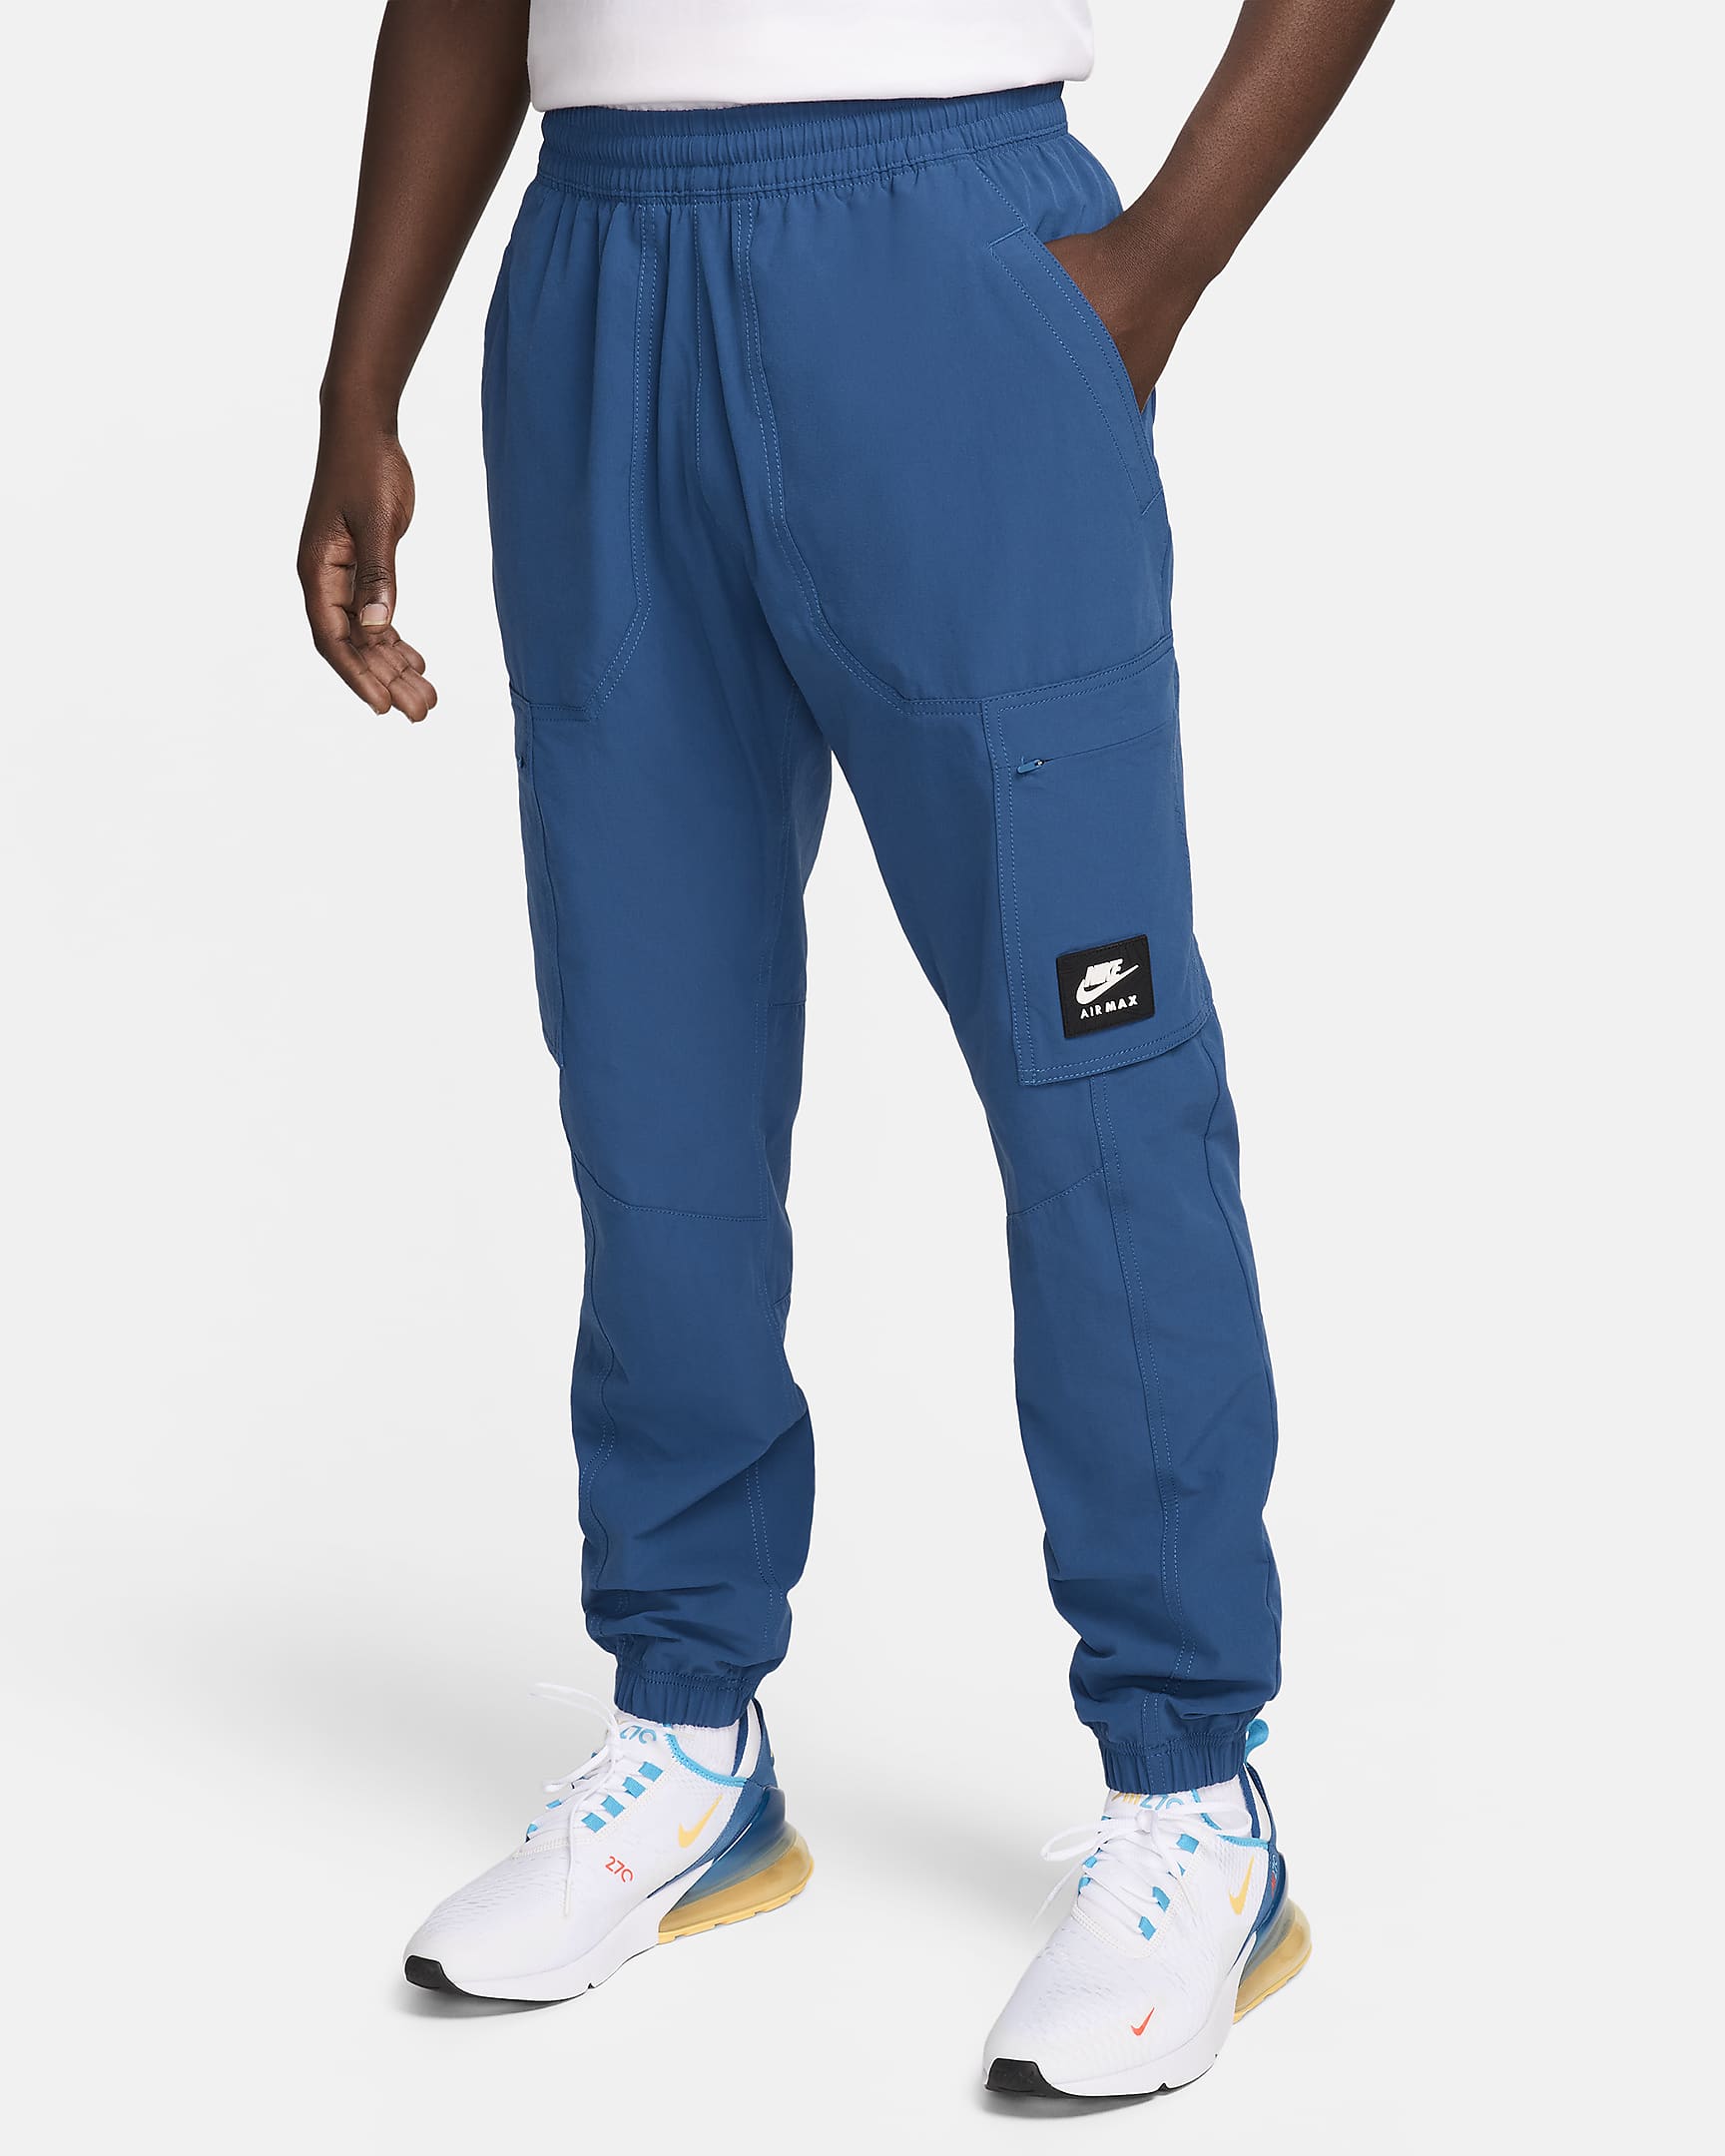 Nike Air Max Men's Woven Cargo Trousers - Court Blue/Black/White